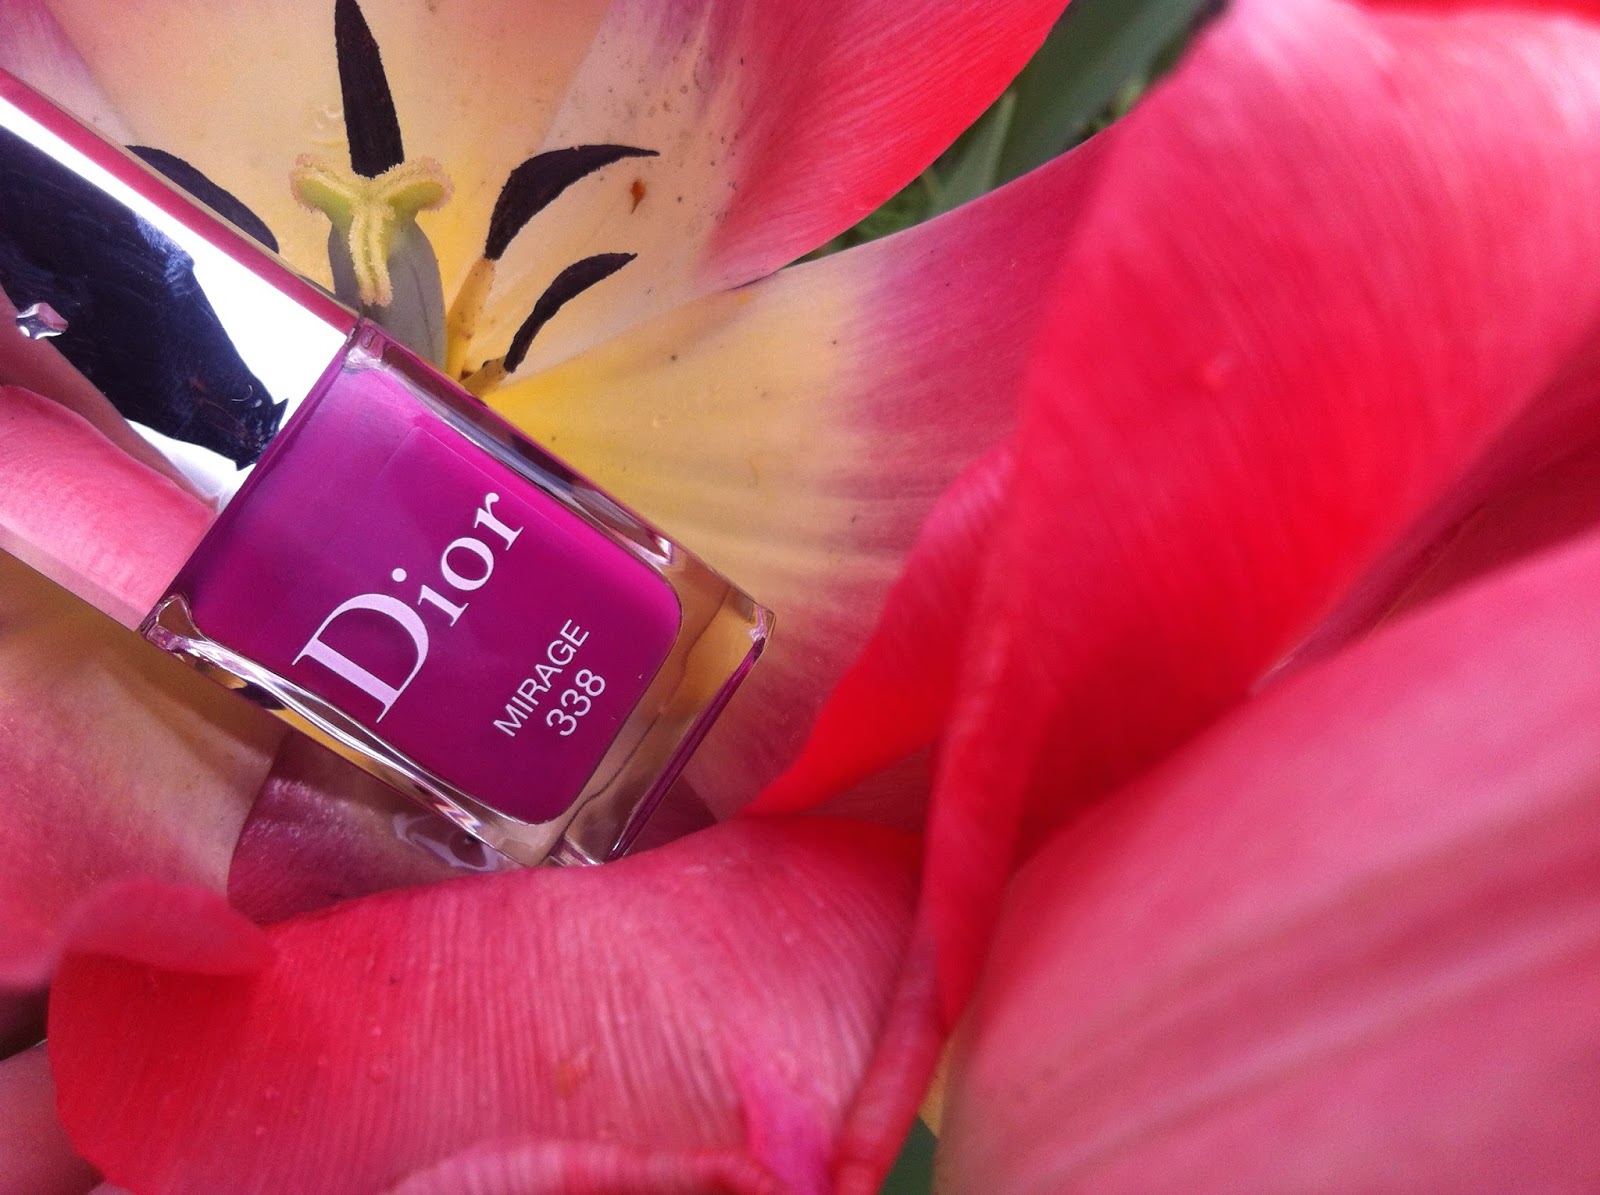 Dior ADDICT Fluid Stick, Dior Vernis 2014, Dior make up primavera 2014, Dior Pandore, Dior Mirage, Dior Wonderland, Dior Aventure